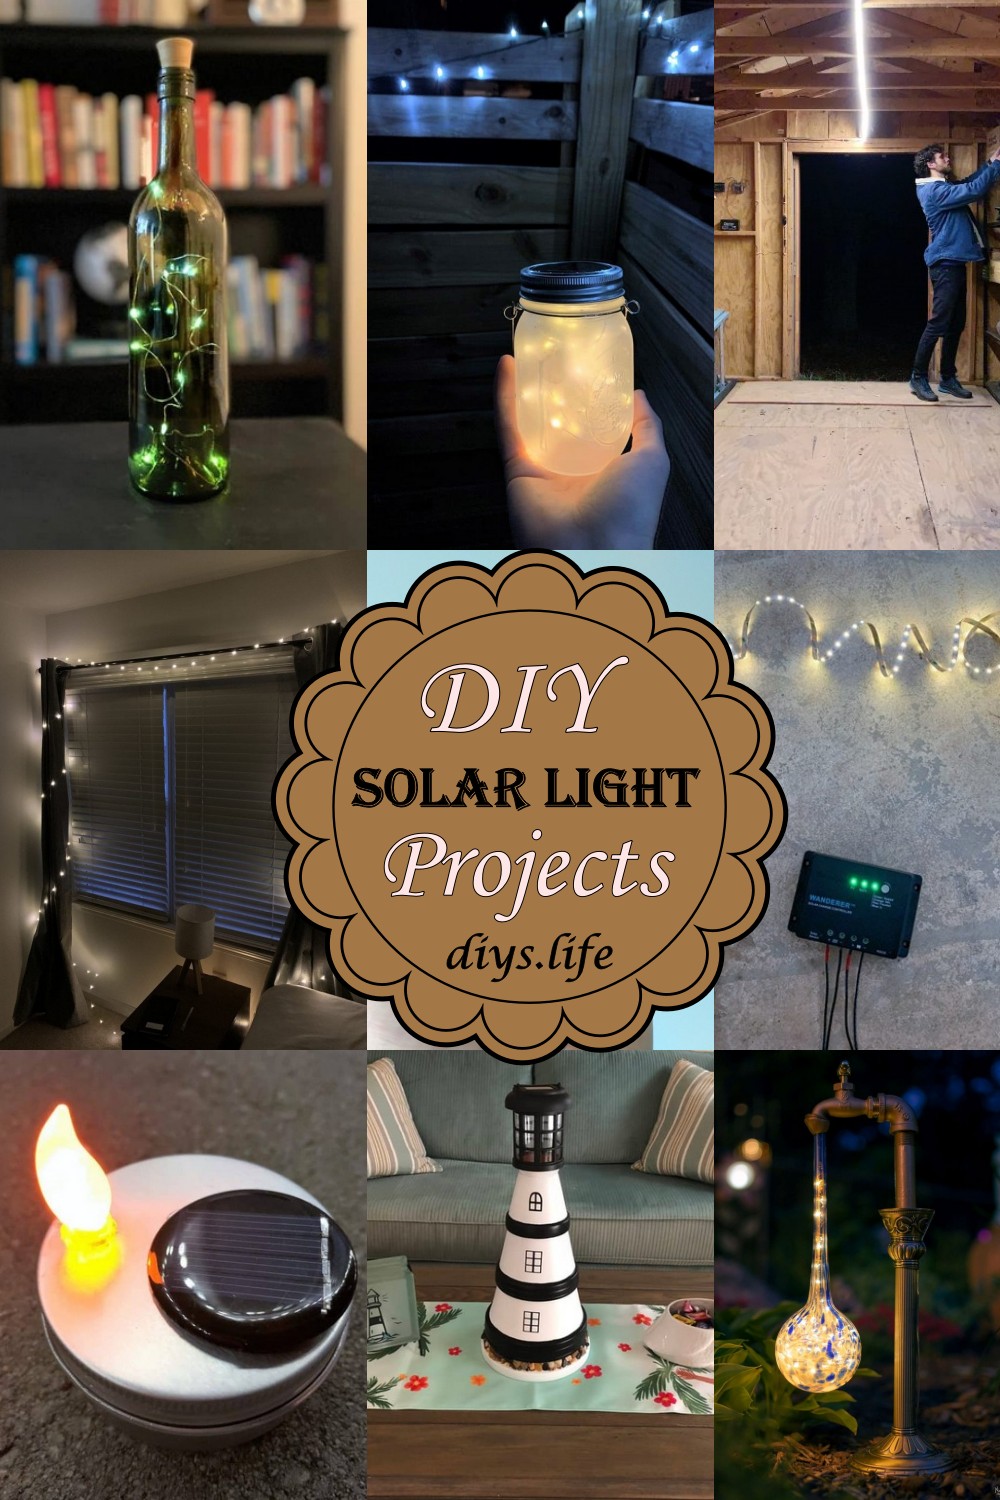 DIY Solar Light Projects